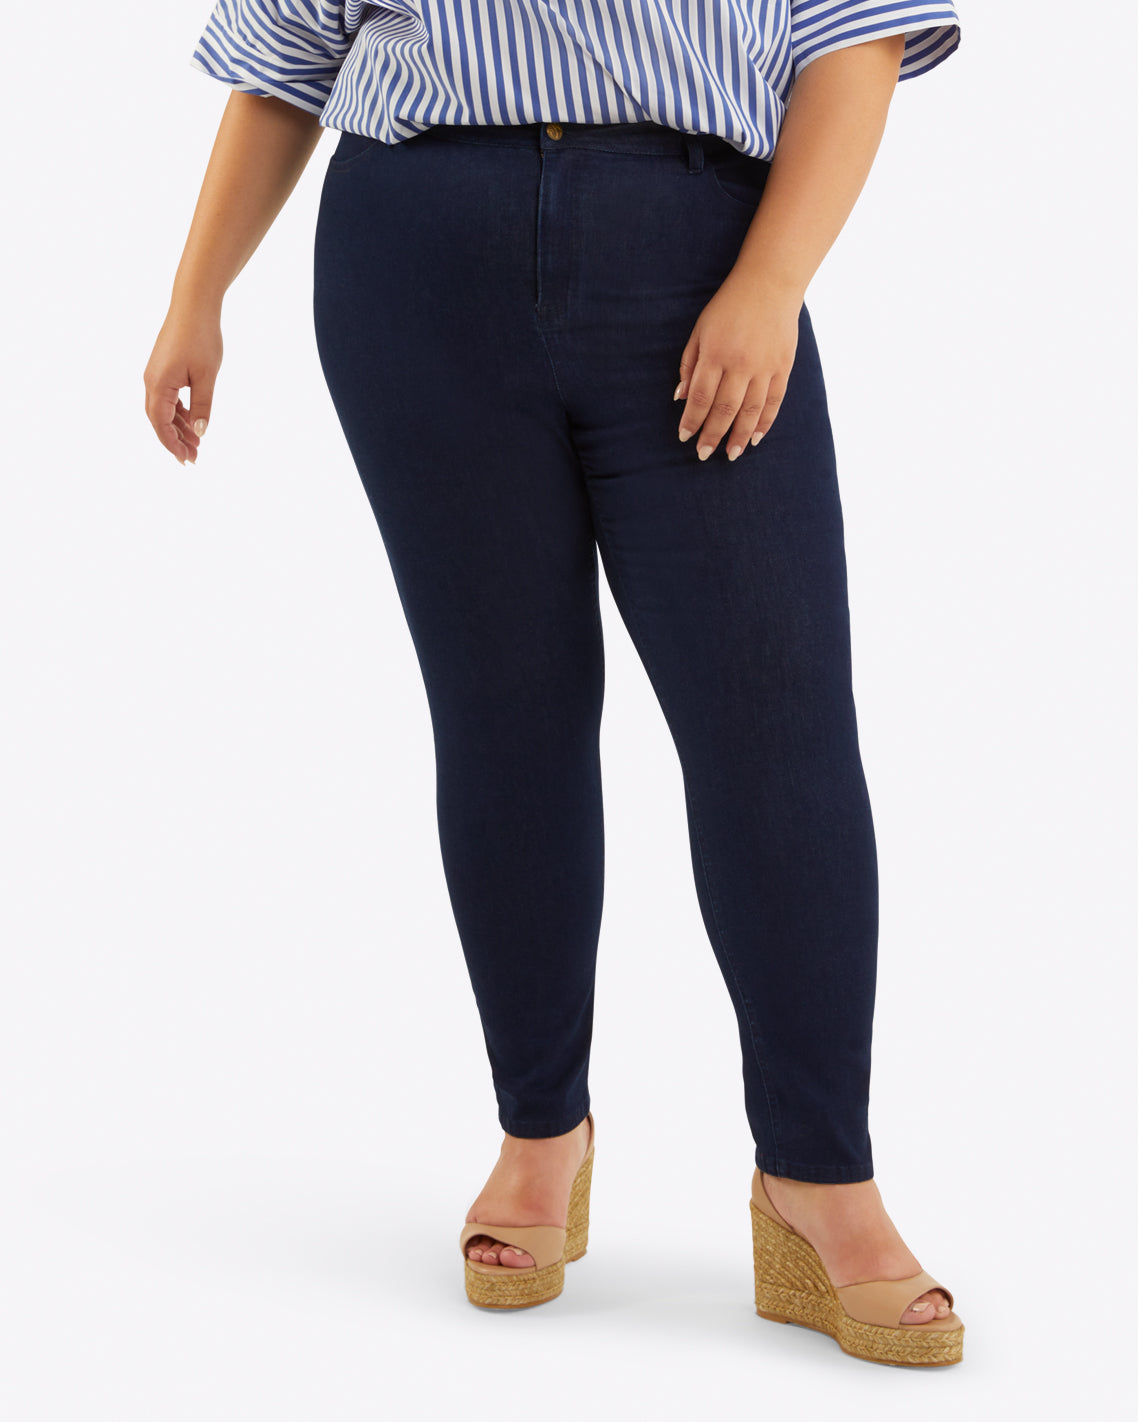 Buy Terra & Sky Women's Plus Size Pull on 2 Pocket Stretch Jegging